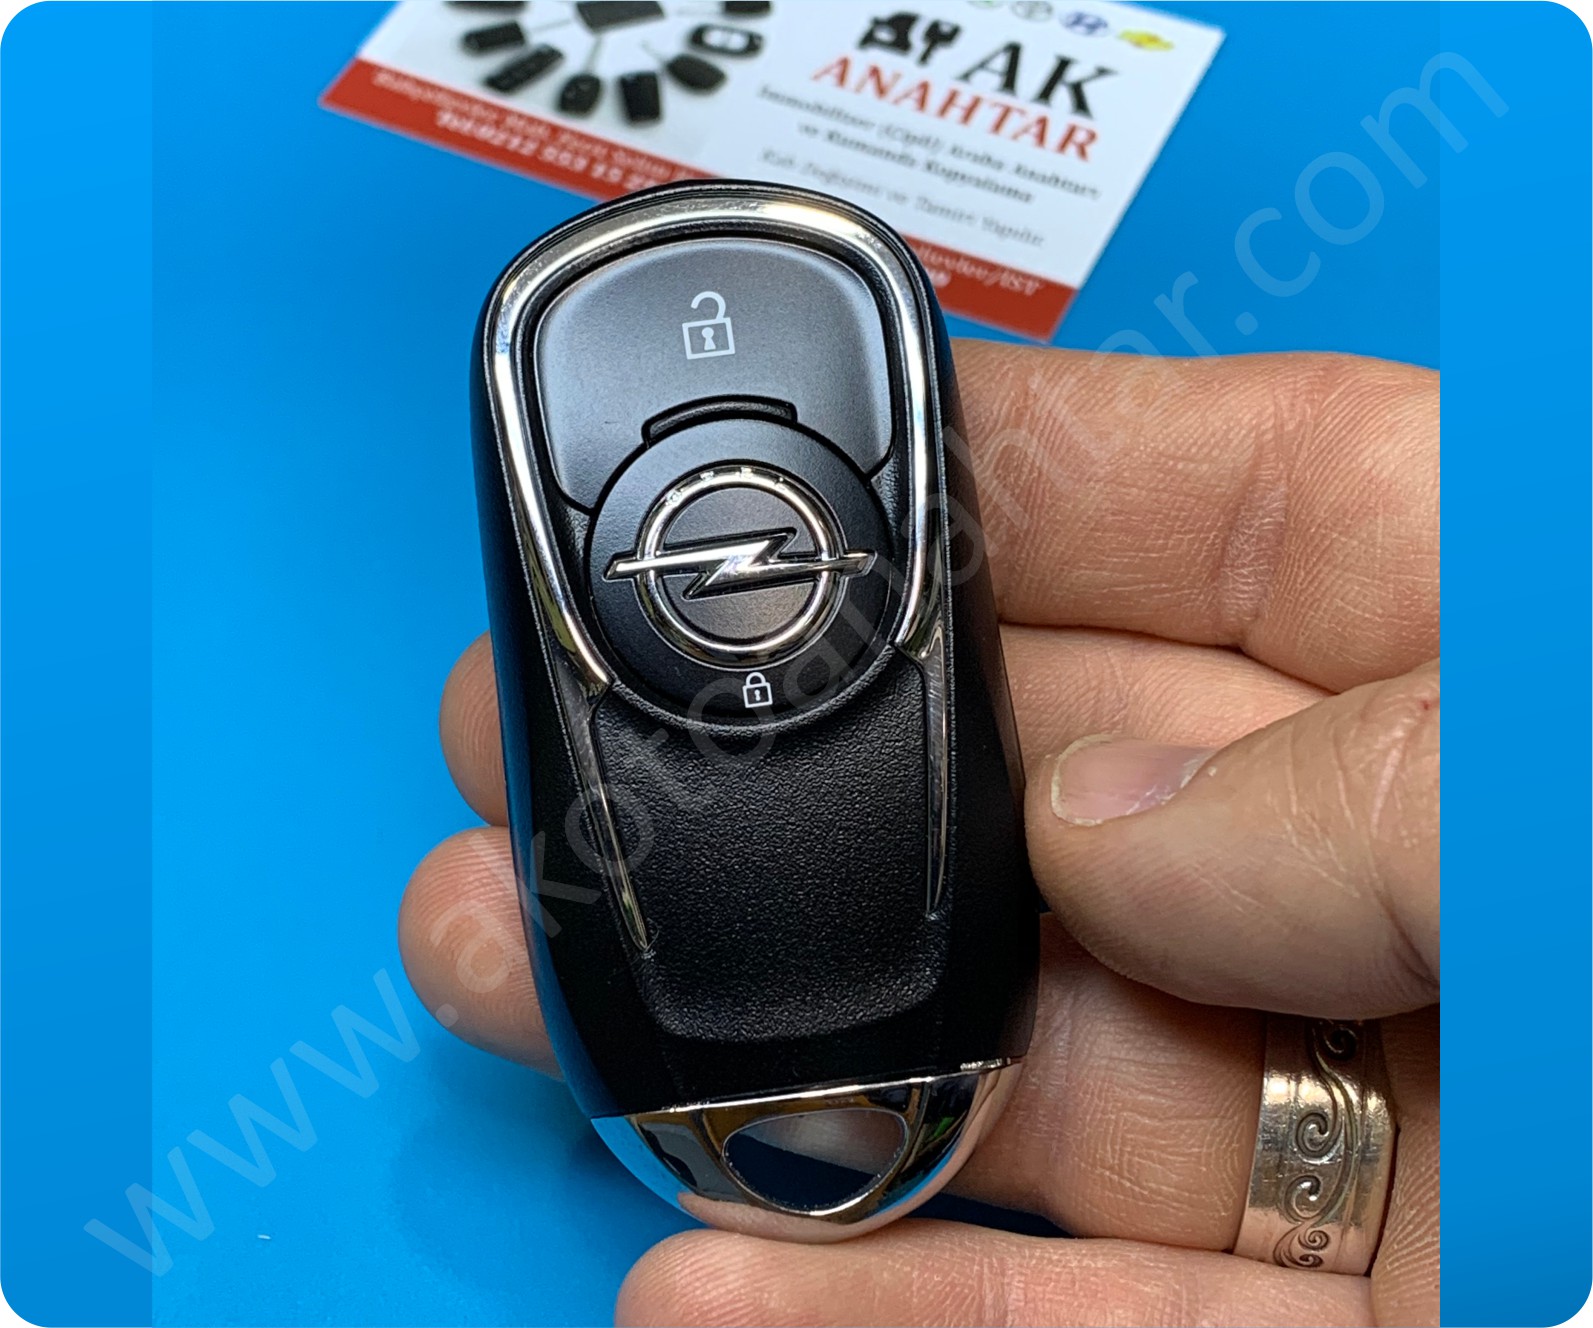 opel yeni insignia anahtari smart yeni keyless anahtar key yedek yaptirma fiyati kopyalama cogaltma kayip 2015 2016 2017 2018 2019 model proximity - Yeni Opel İnsignia Smart Anahtarı | Yedek ve Kayıp Anahtar Yapımı